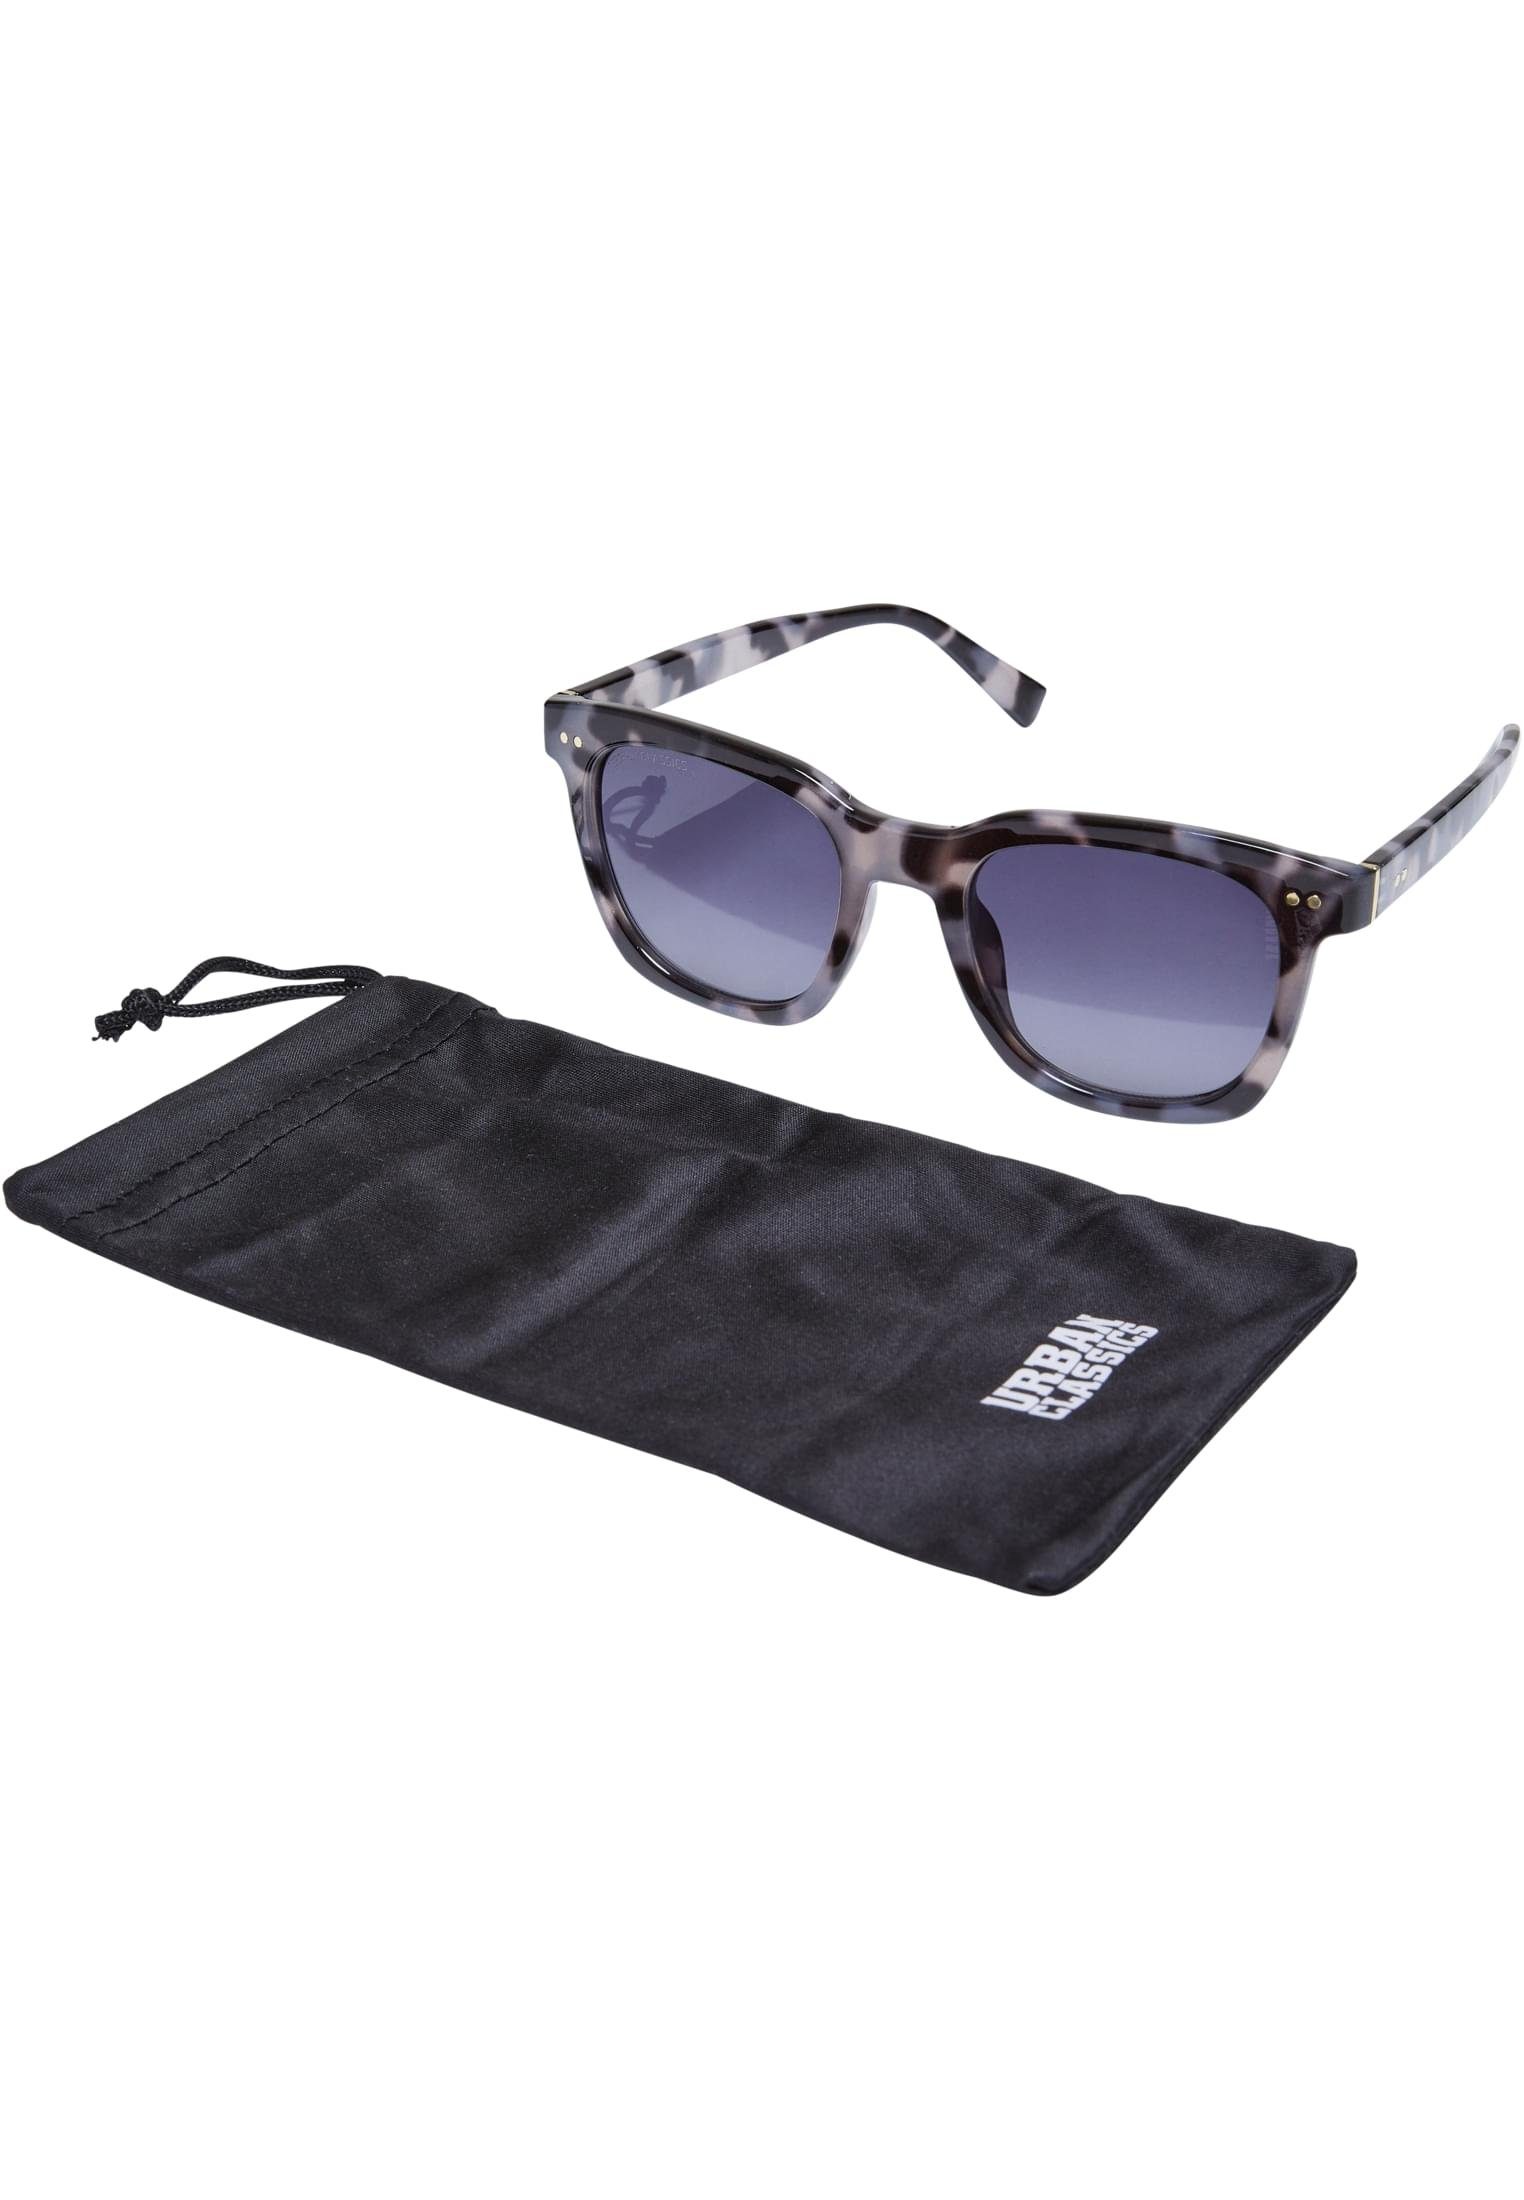 Sunglasses URBAN Sonnenbrille amber/black Naples CLASSICS Unisex